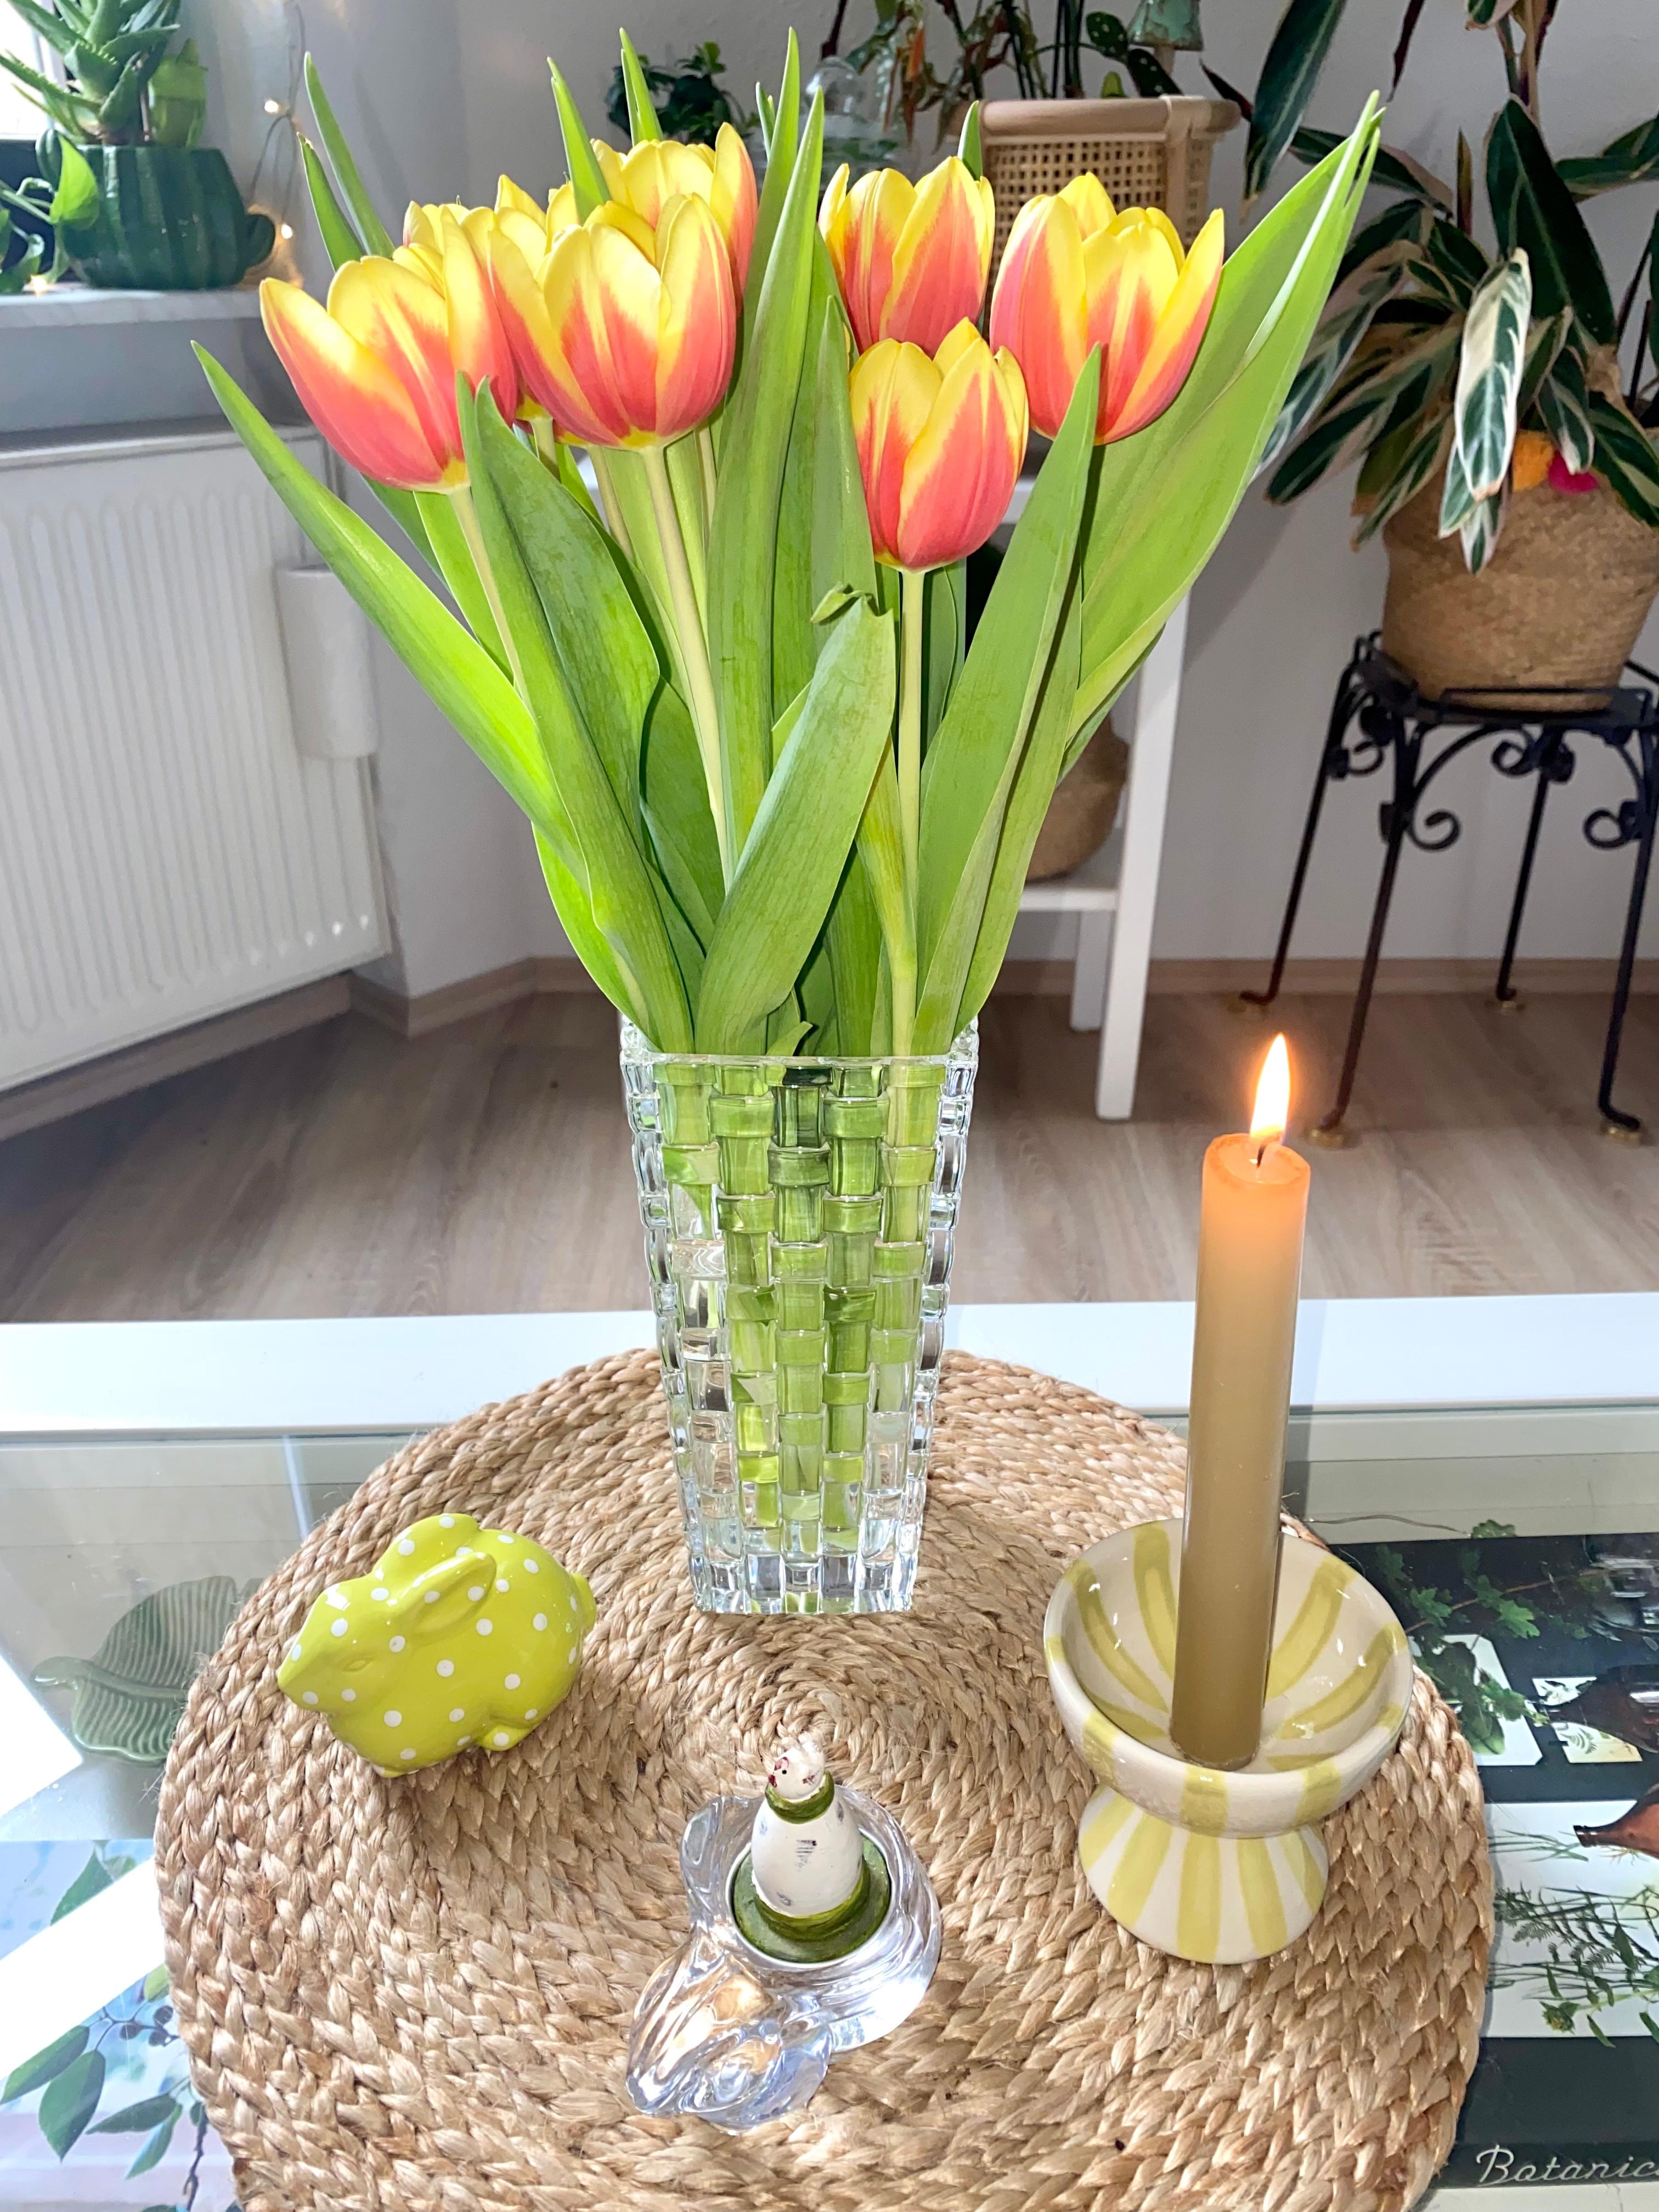 Tulpen gehören zu meinen Lieblingsblumen. 🌷😍
#tulpen #deko #ostern #frühlingsdeko #osterdeko #osterhase #kerzen